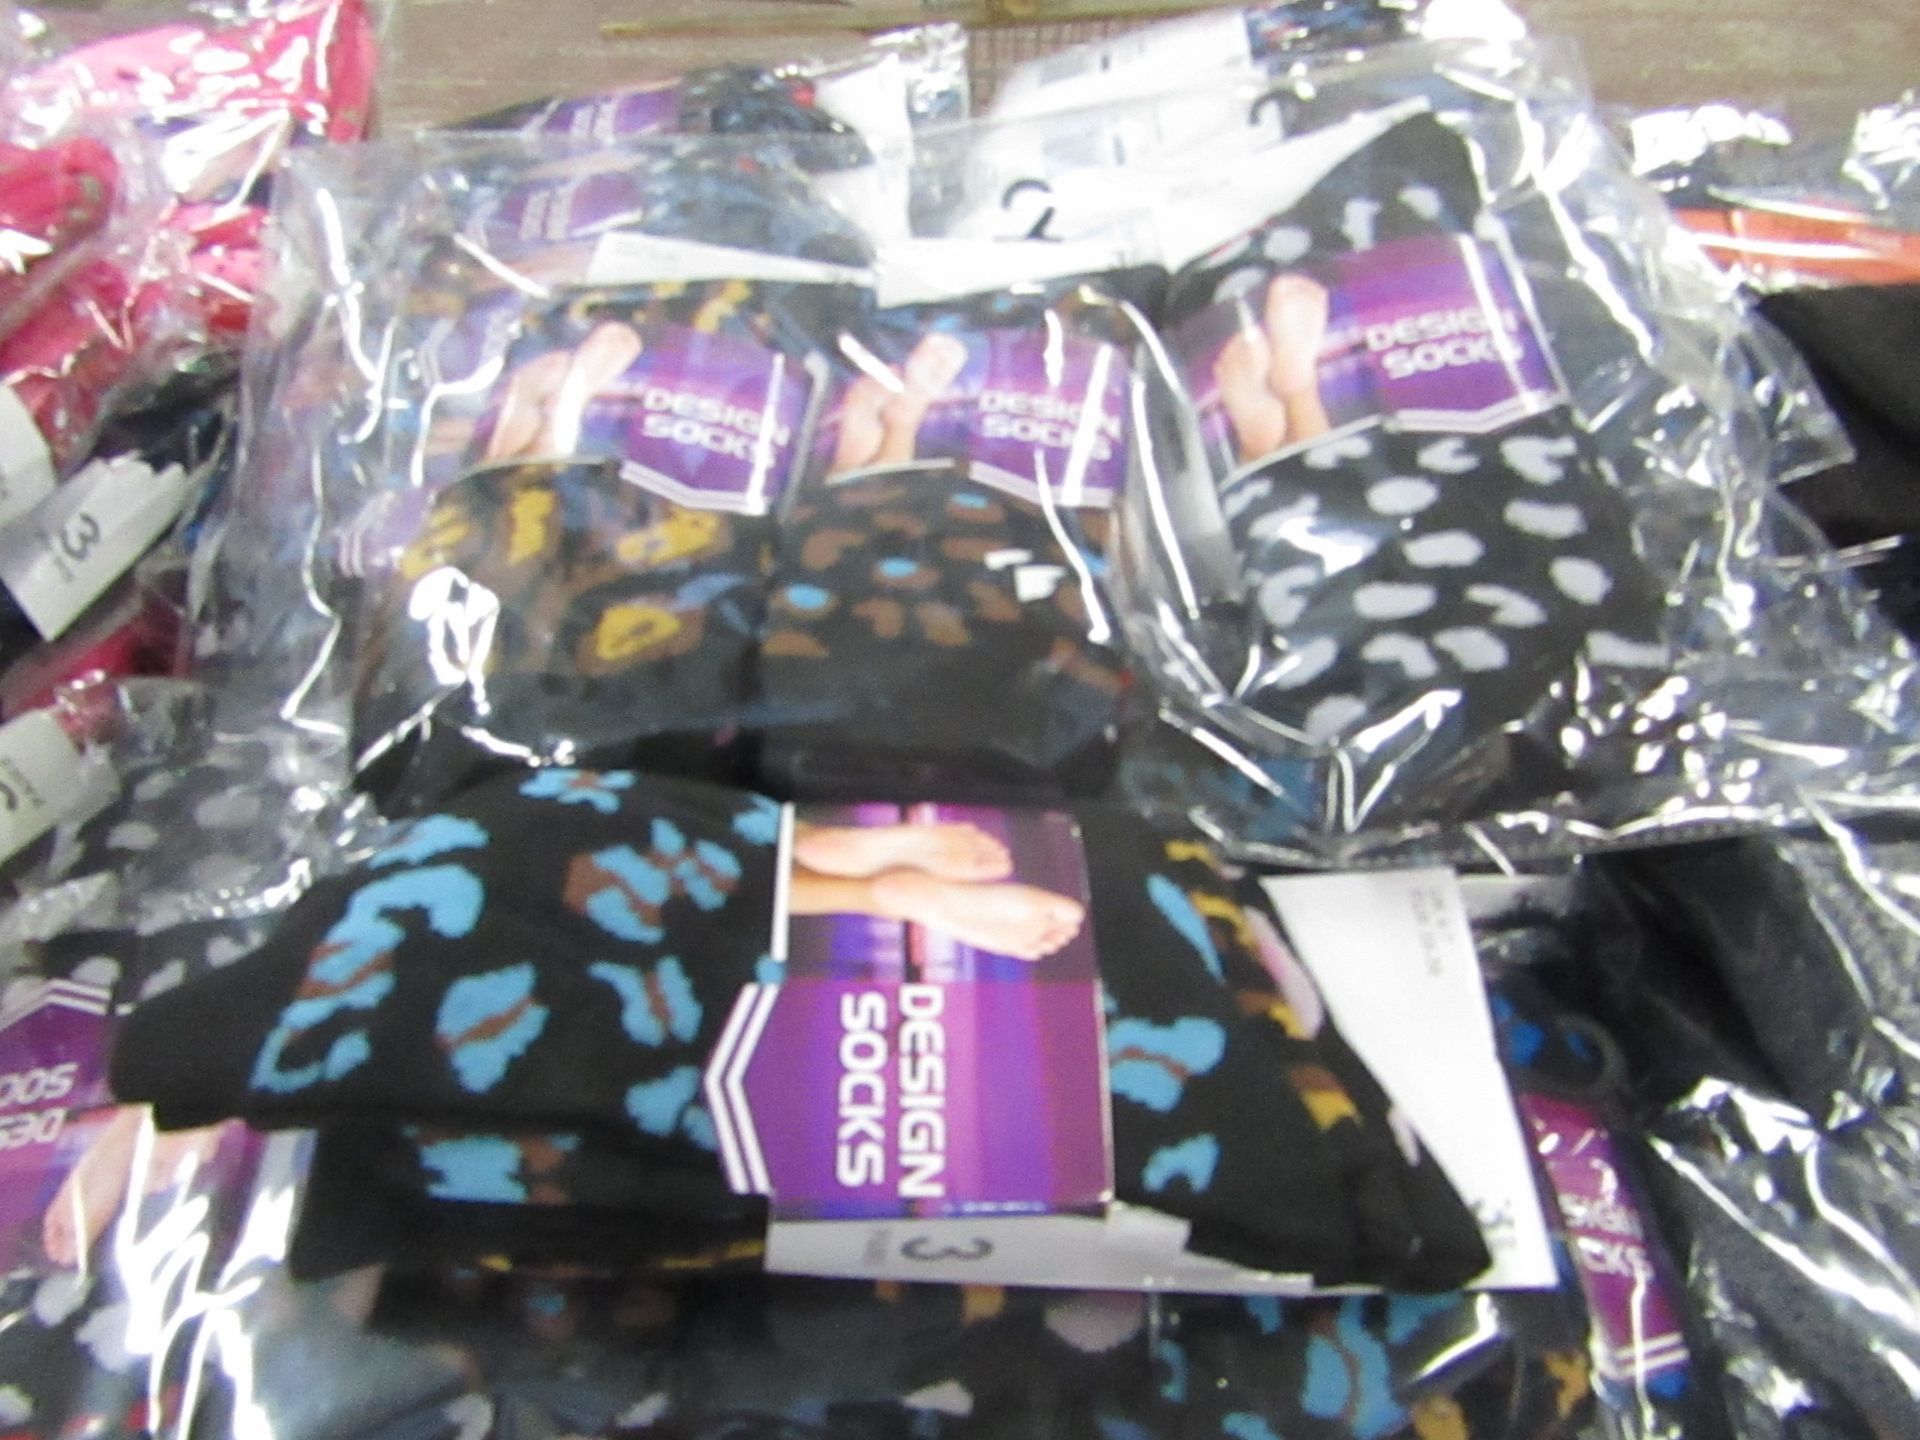 12 X Pairs of Ladies Design Socks size 4-7 new in packaging